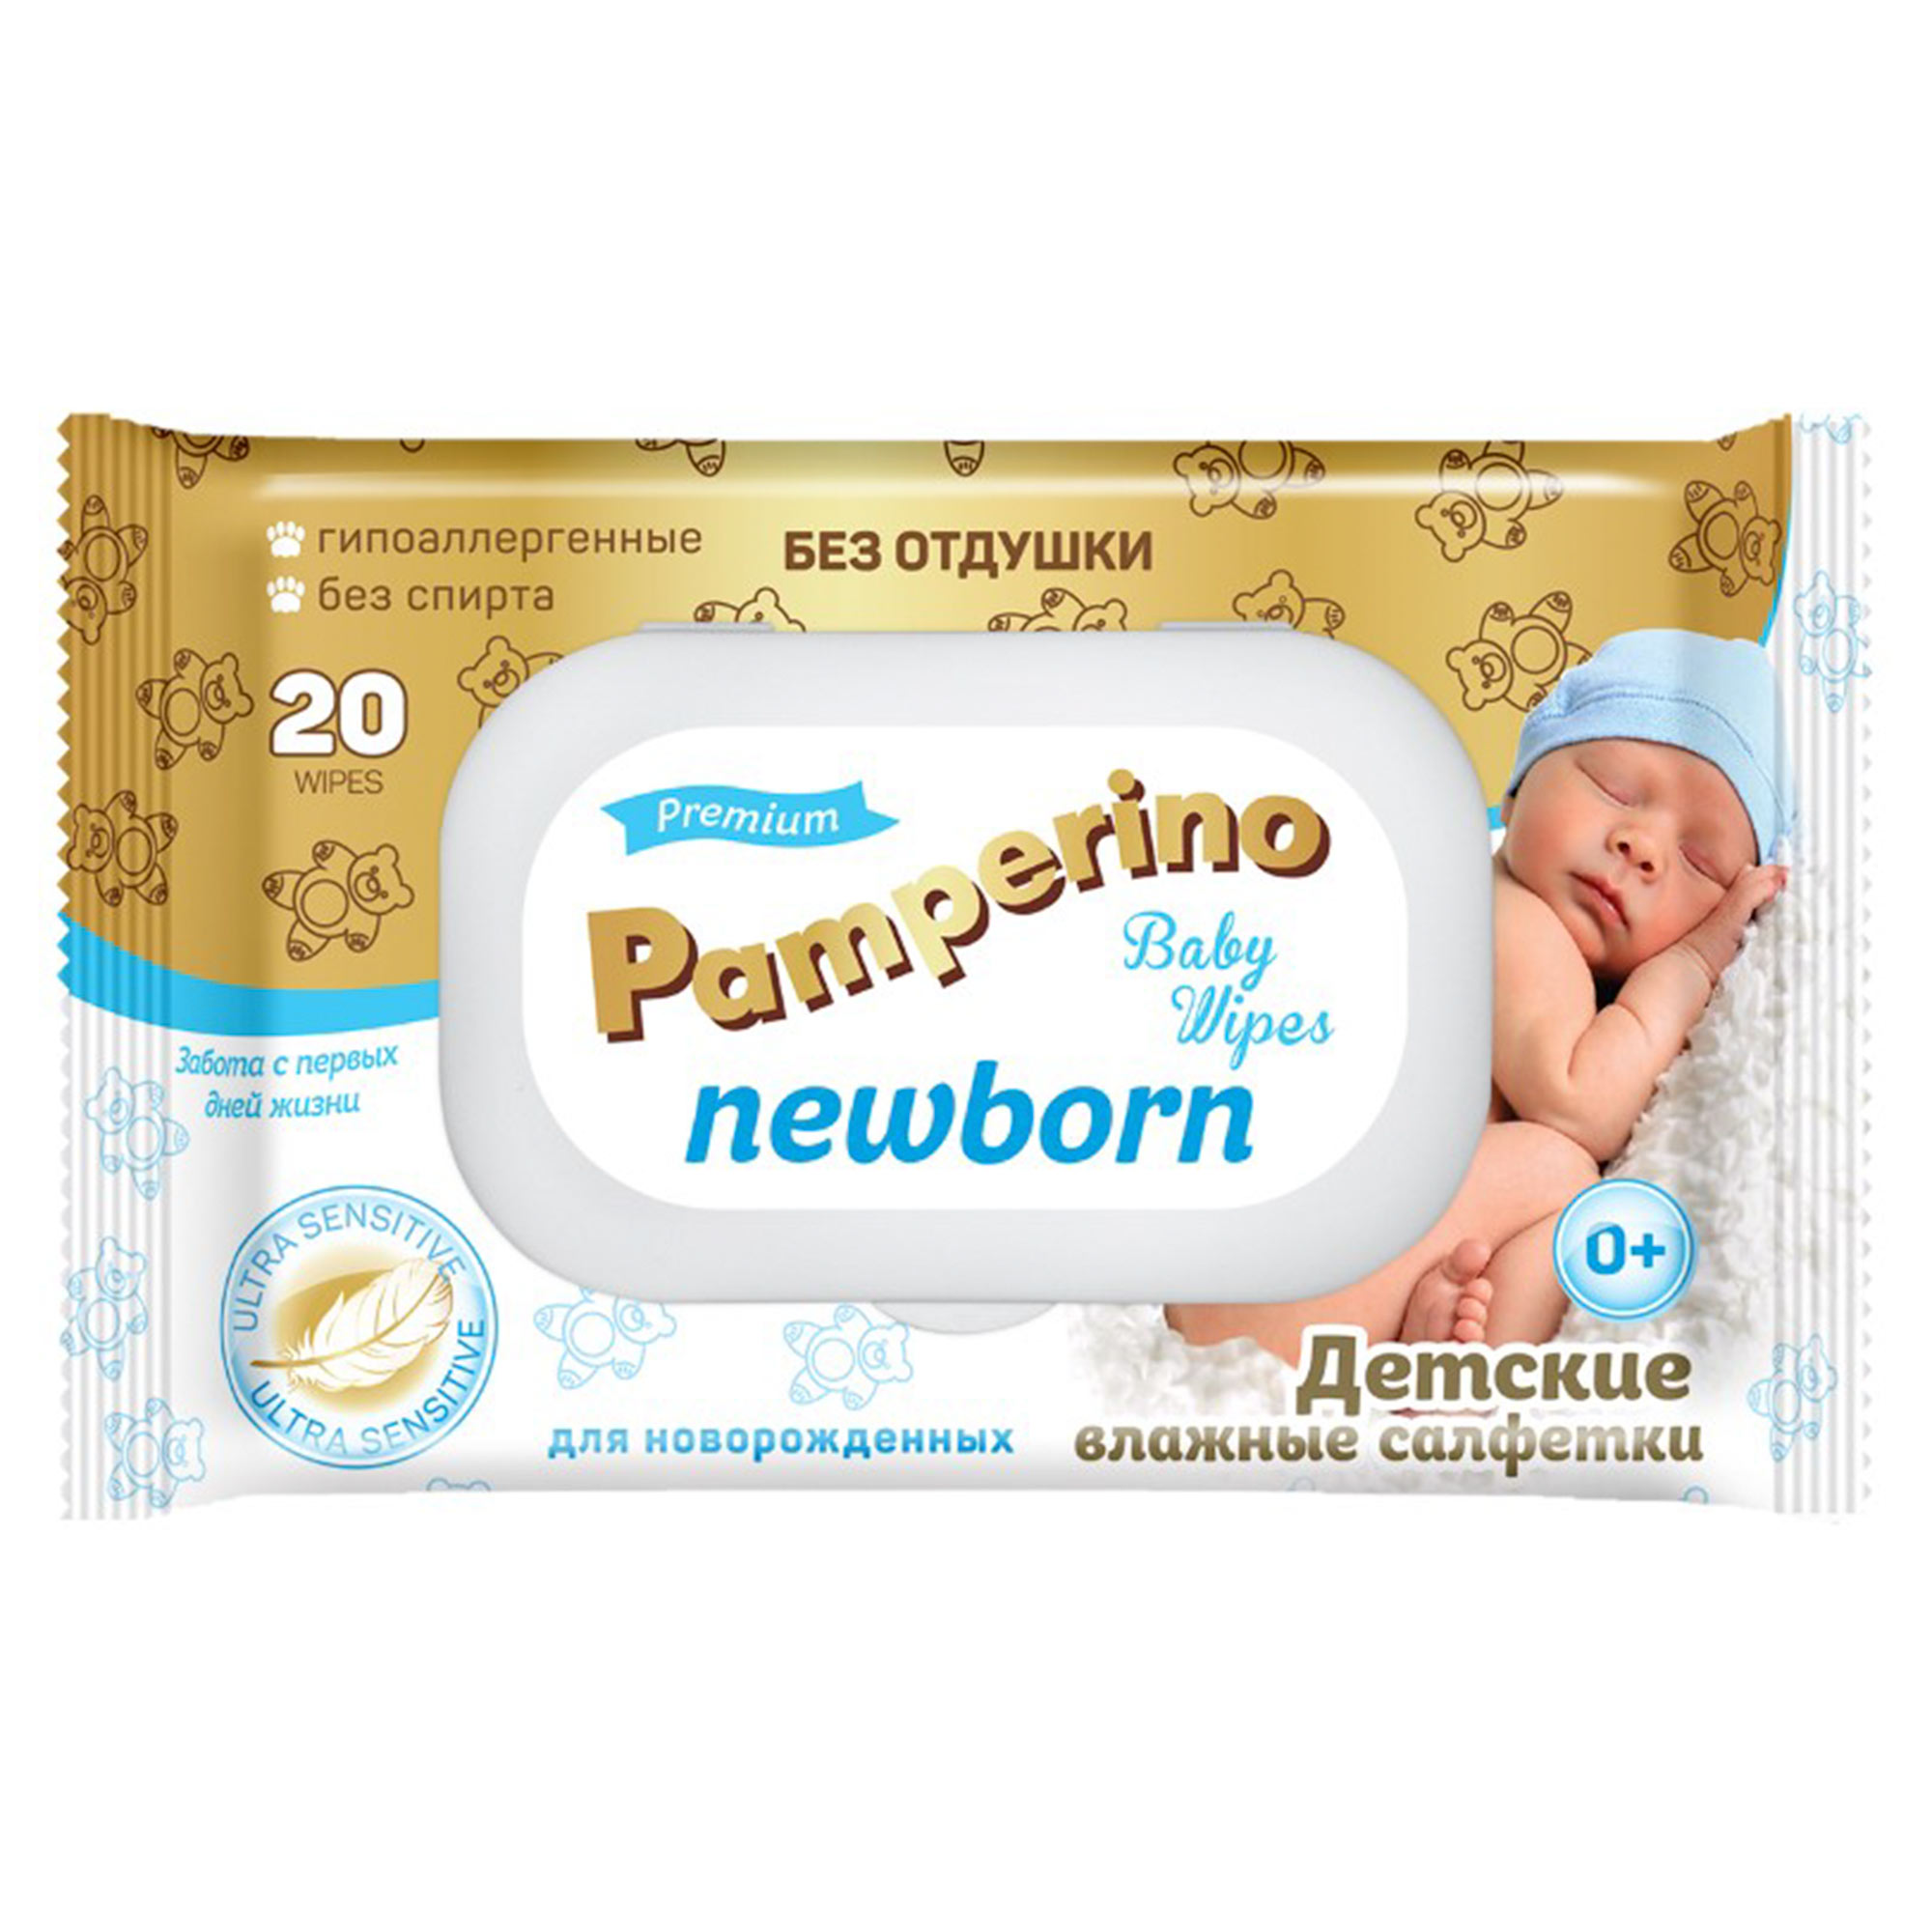 Влажные салфетки Pamperino Newborn без отдушки с пластиковым клапаном 20 шт салфетки влажные pamperino без отдушки 56 шт